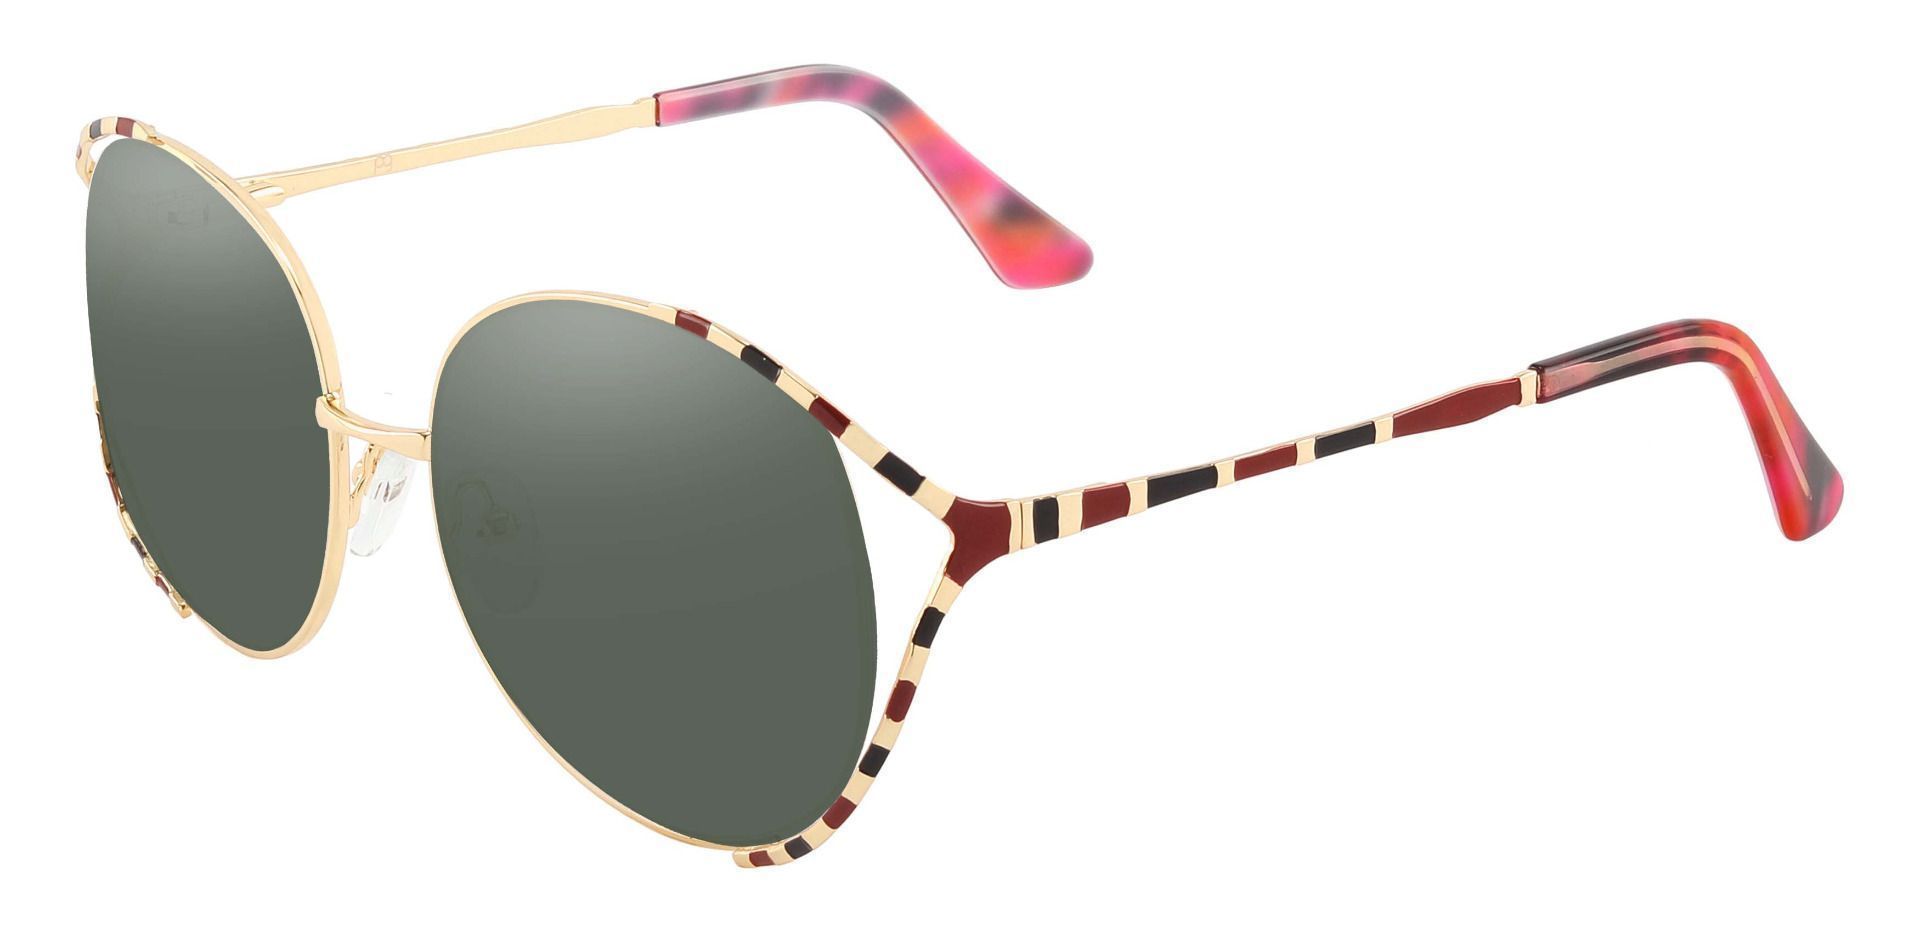 Dorothy Oval Prescription Sunglasses - Pink Frame With Green Lenses